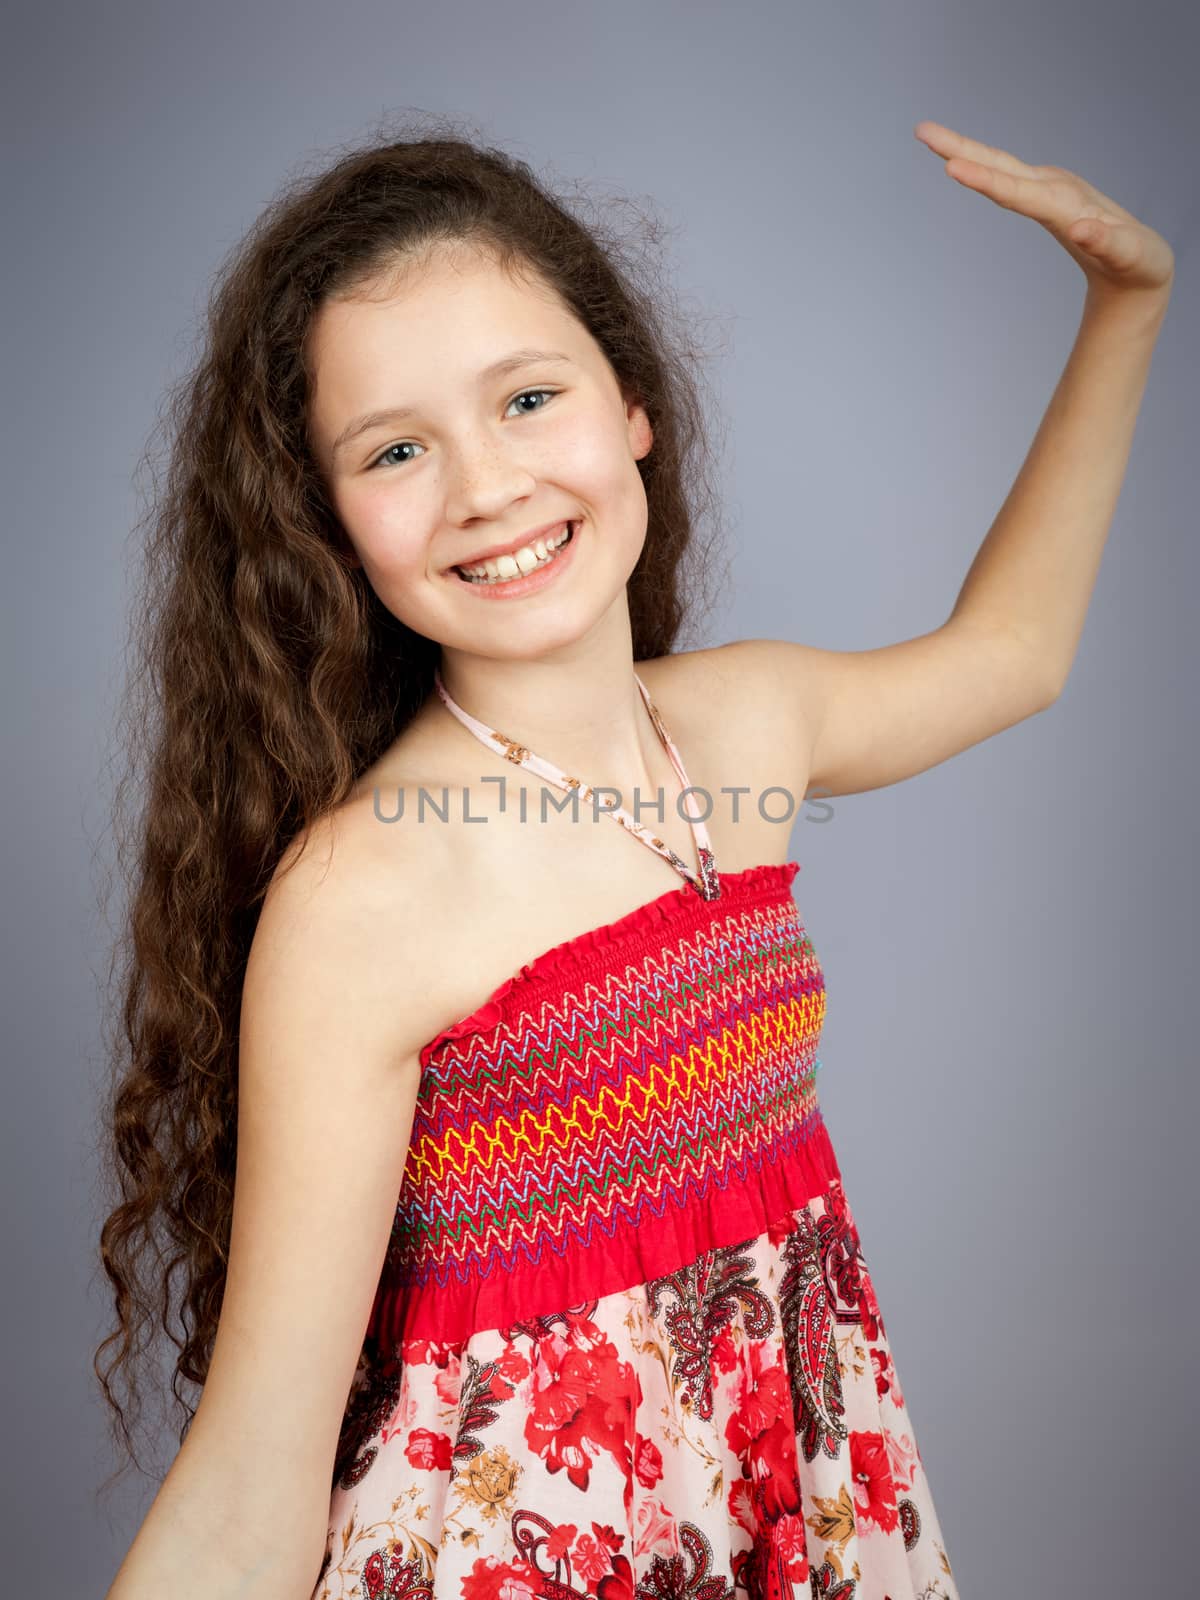 An image of a beautiful young girl dancing